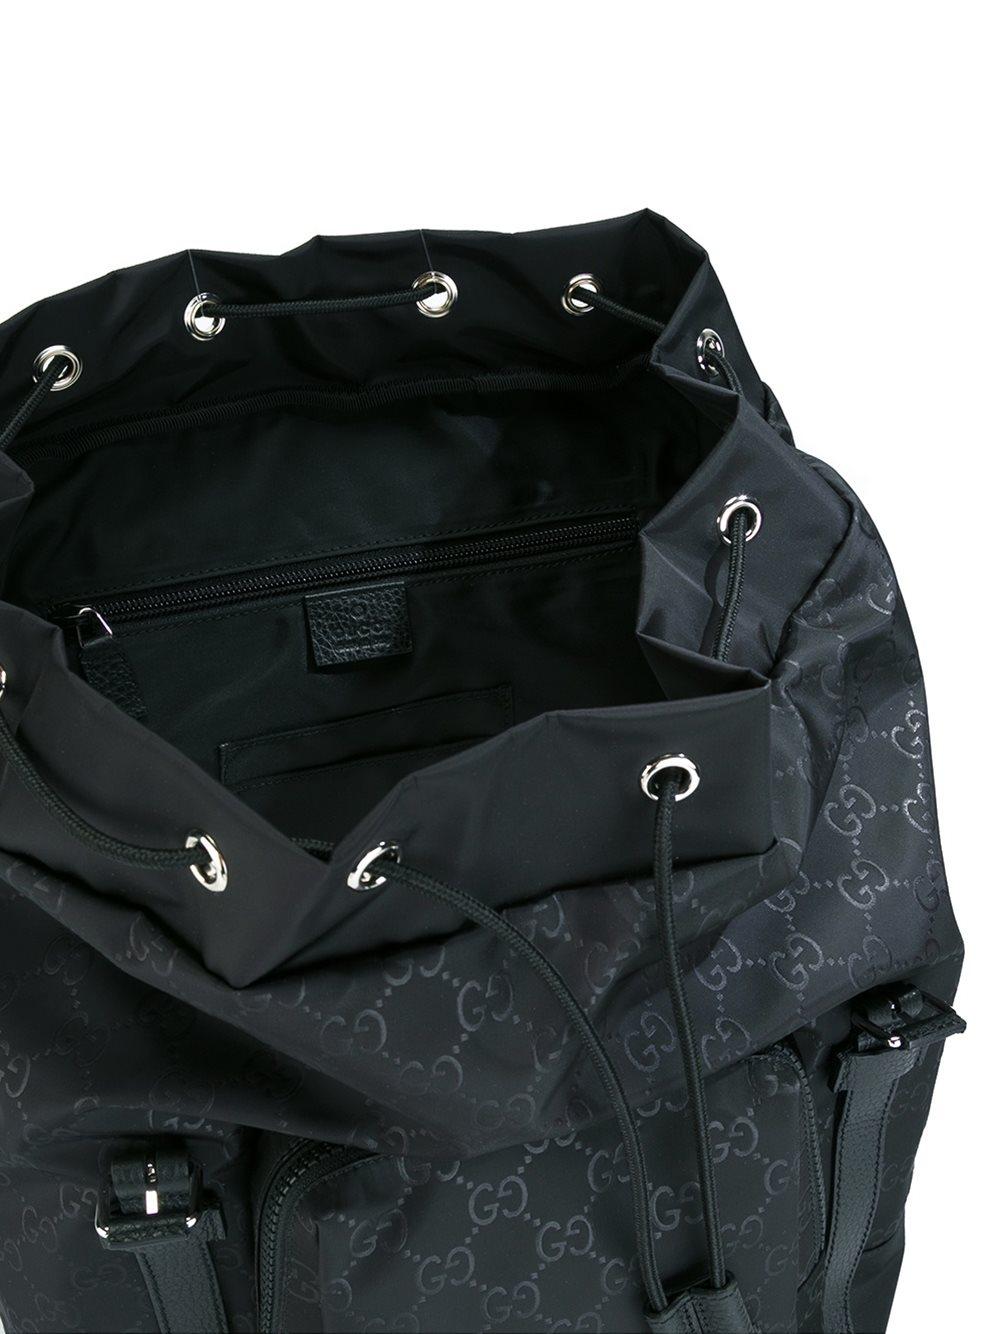 Lyst - Gucci Logo Print Backpack in Black for Men